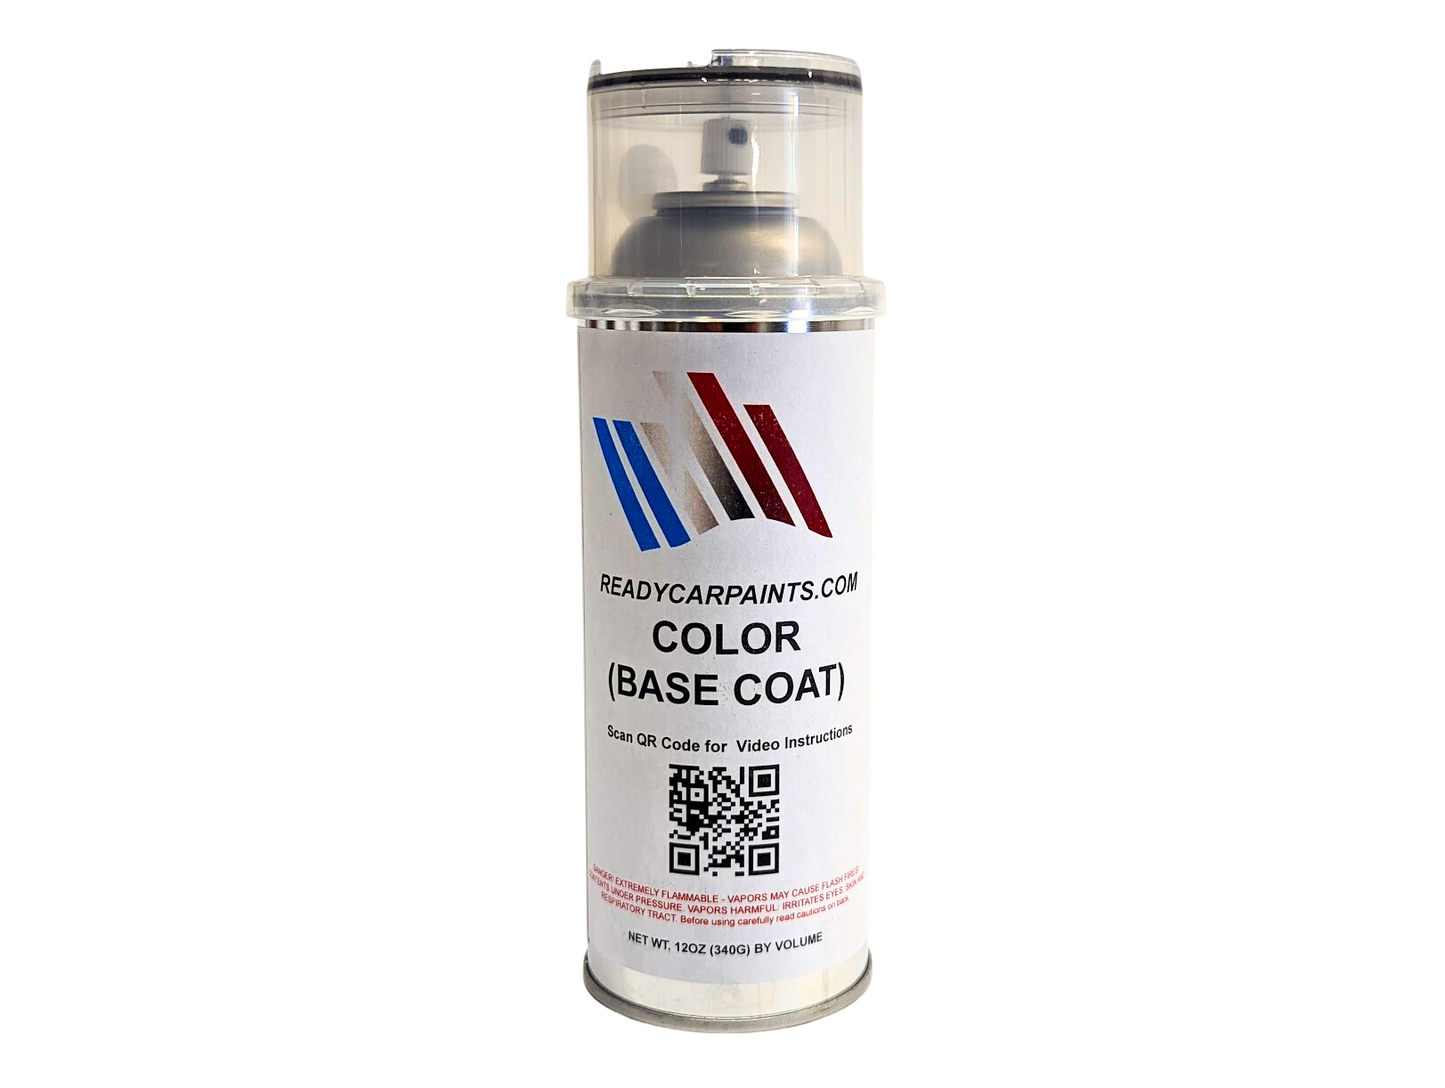 MASERATI 226520 Nero Carbonio Metallic Automotive Spray Paint 100% OEM Color Match